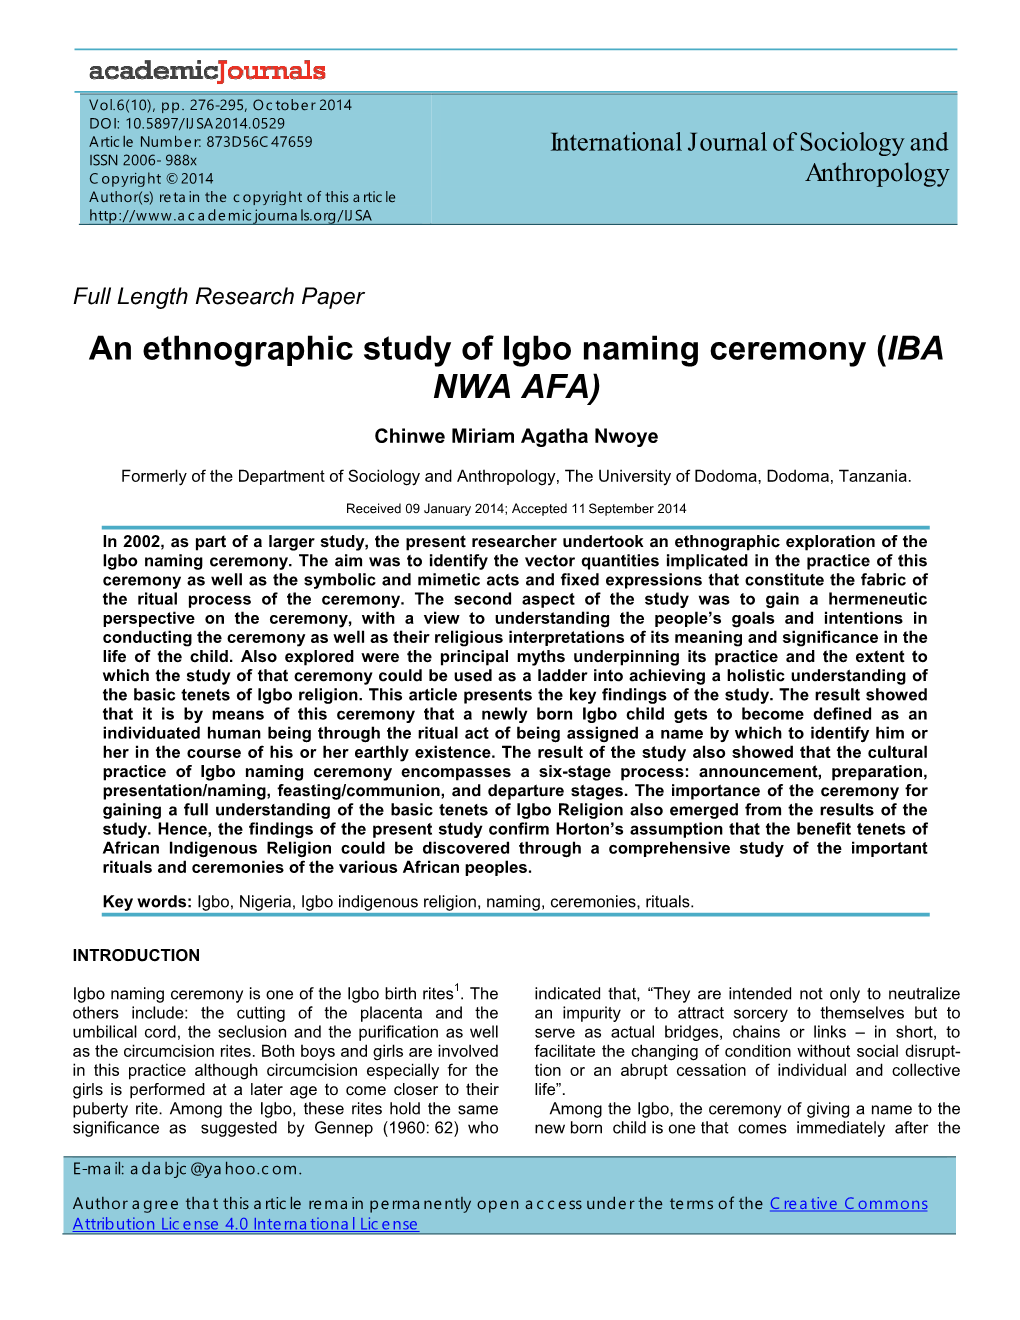 An Ethnographic Study of Igbo Naming Ceremony (IBA NWA AFA)